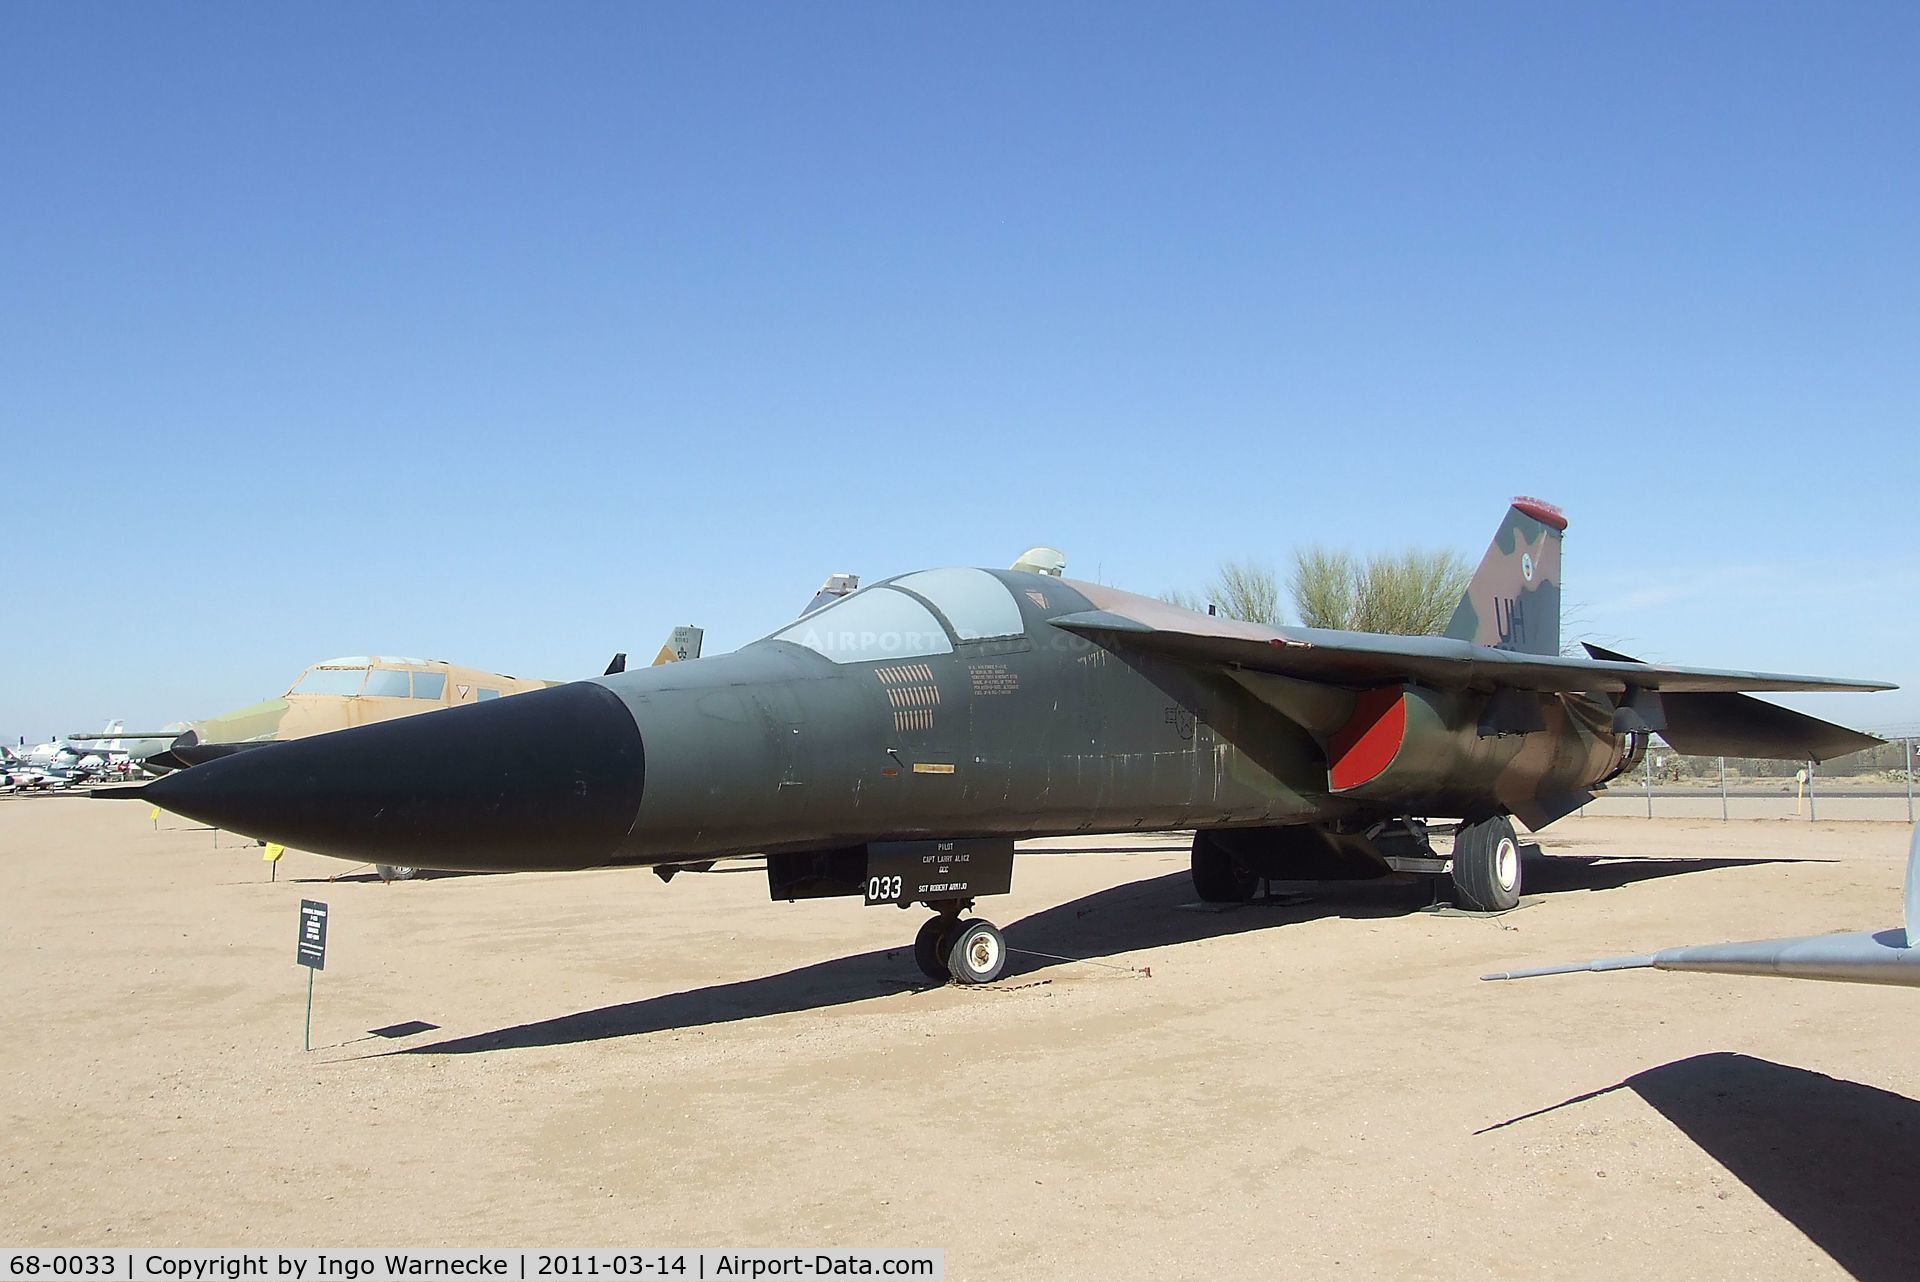 68-0033, 1968 General Dynamics F-111E Aardvark C/N A1-202, General Dynamics F-111E at the Pima Air & Space Museum, Tucson AZ